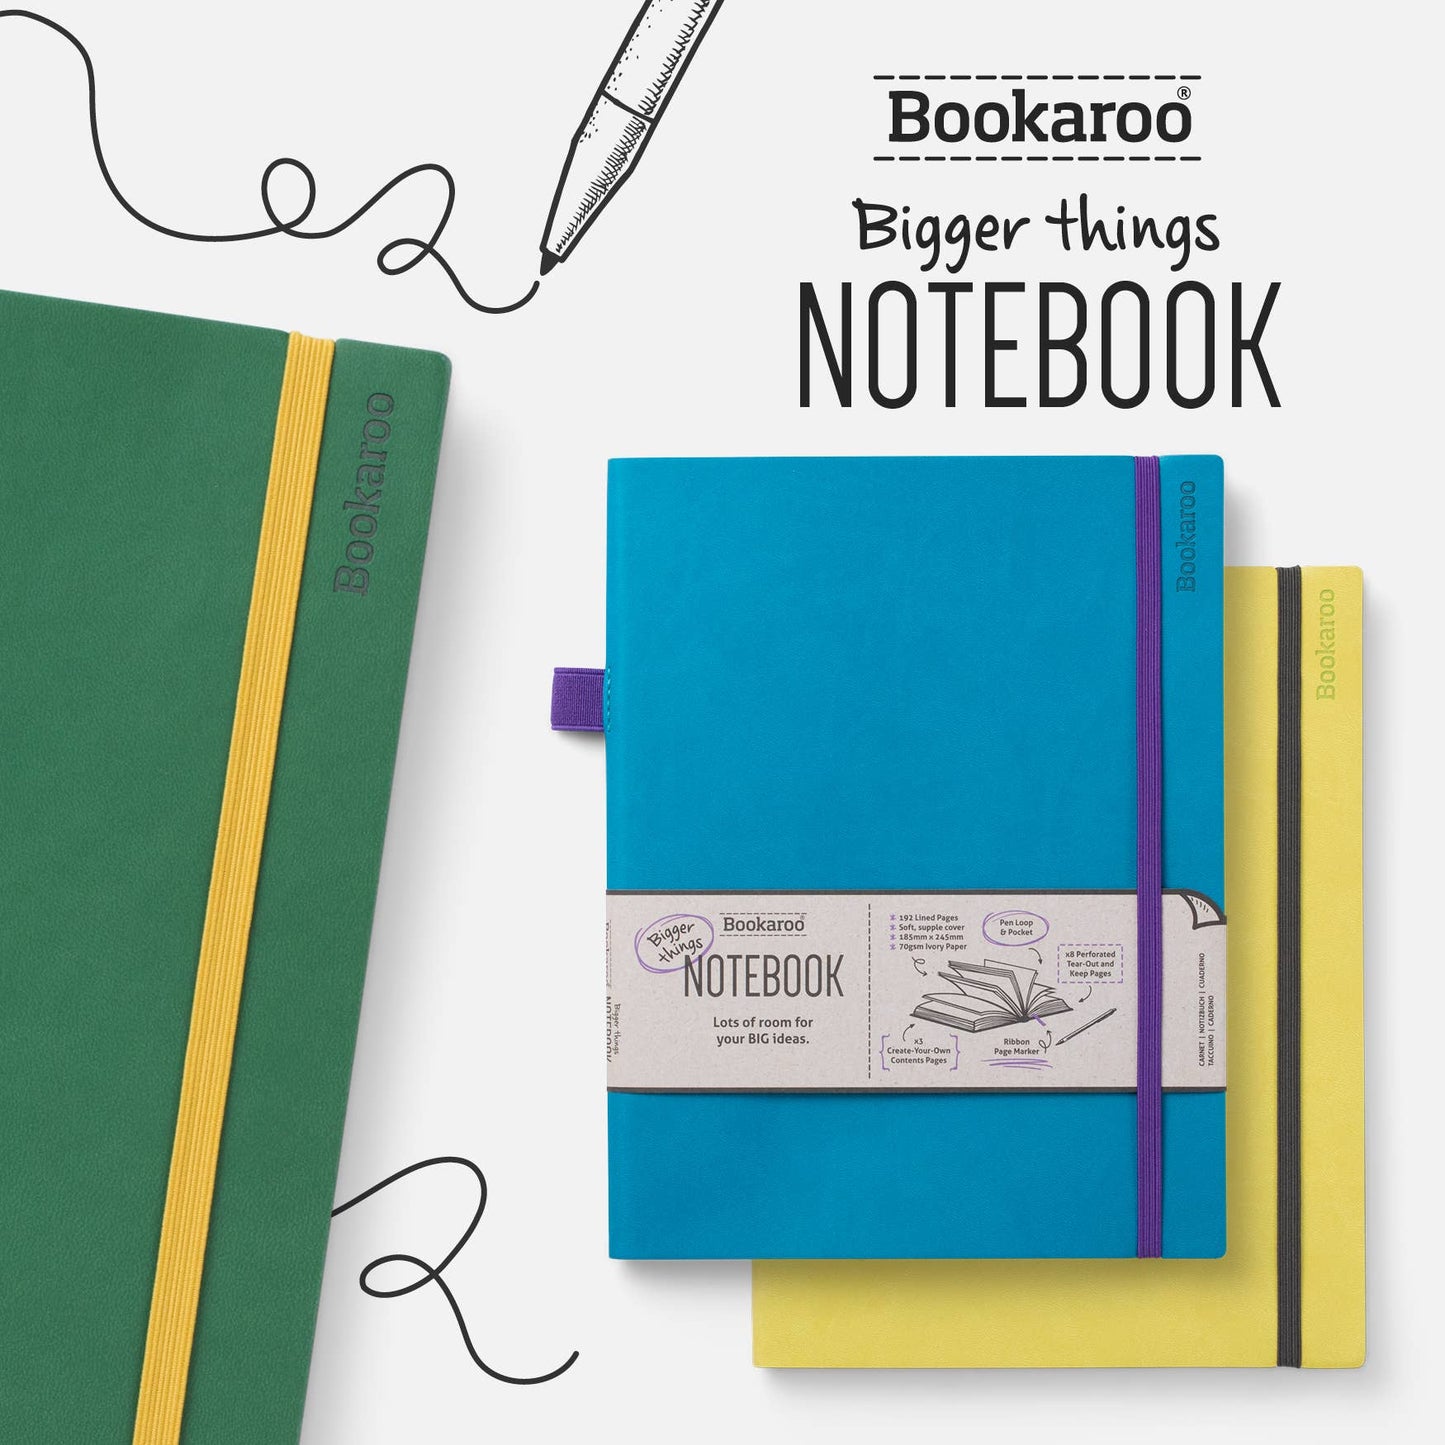 Bookaroo Bigger Things Notebook: Teal